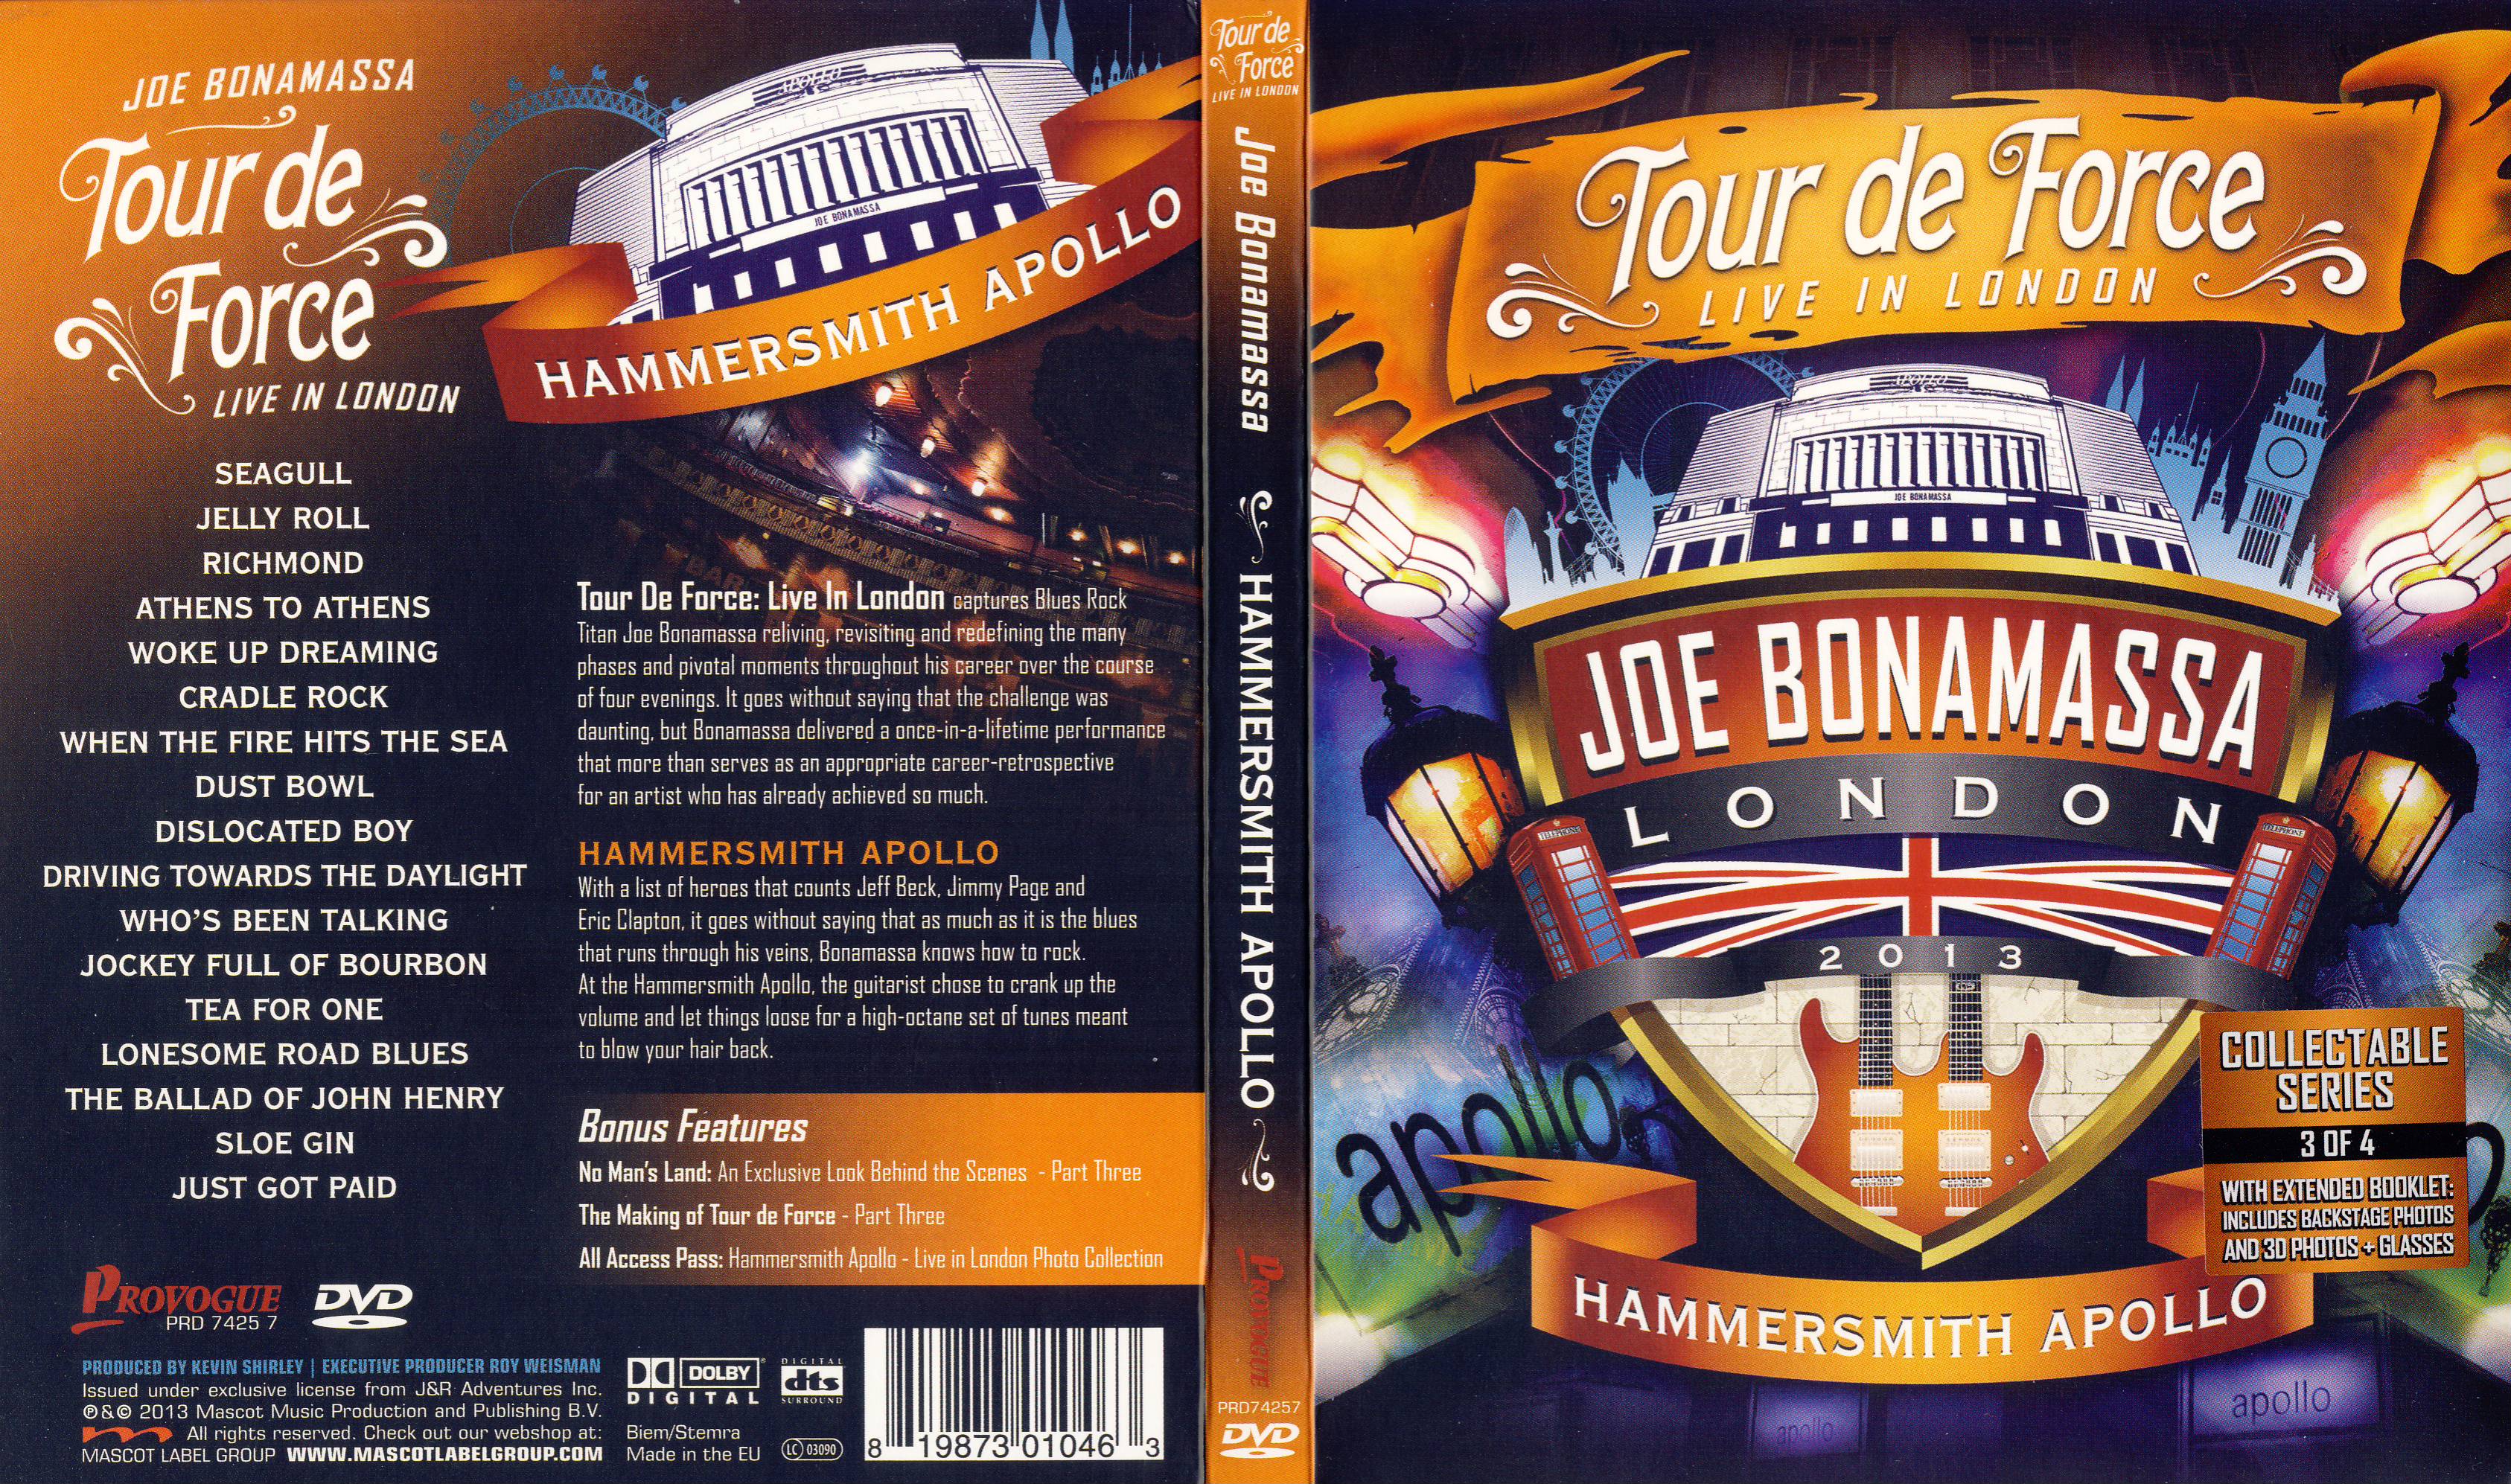 Jaquette DVD Joe Bonamassa Tour de Force london 2013 Hammersmith Apollo